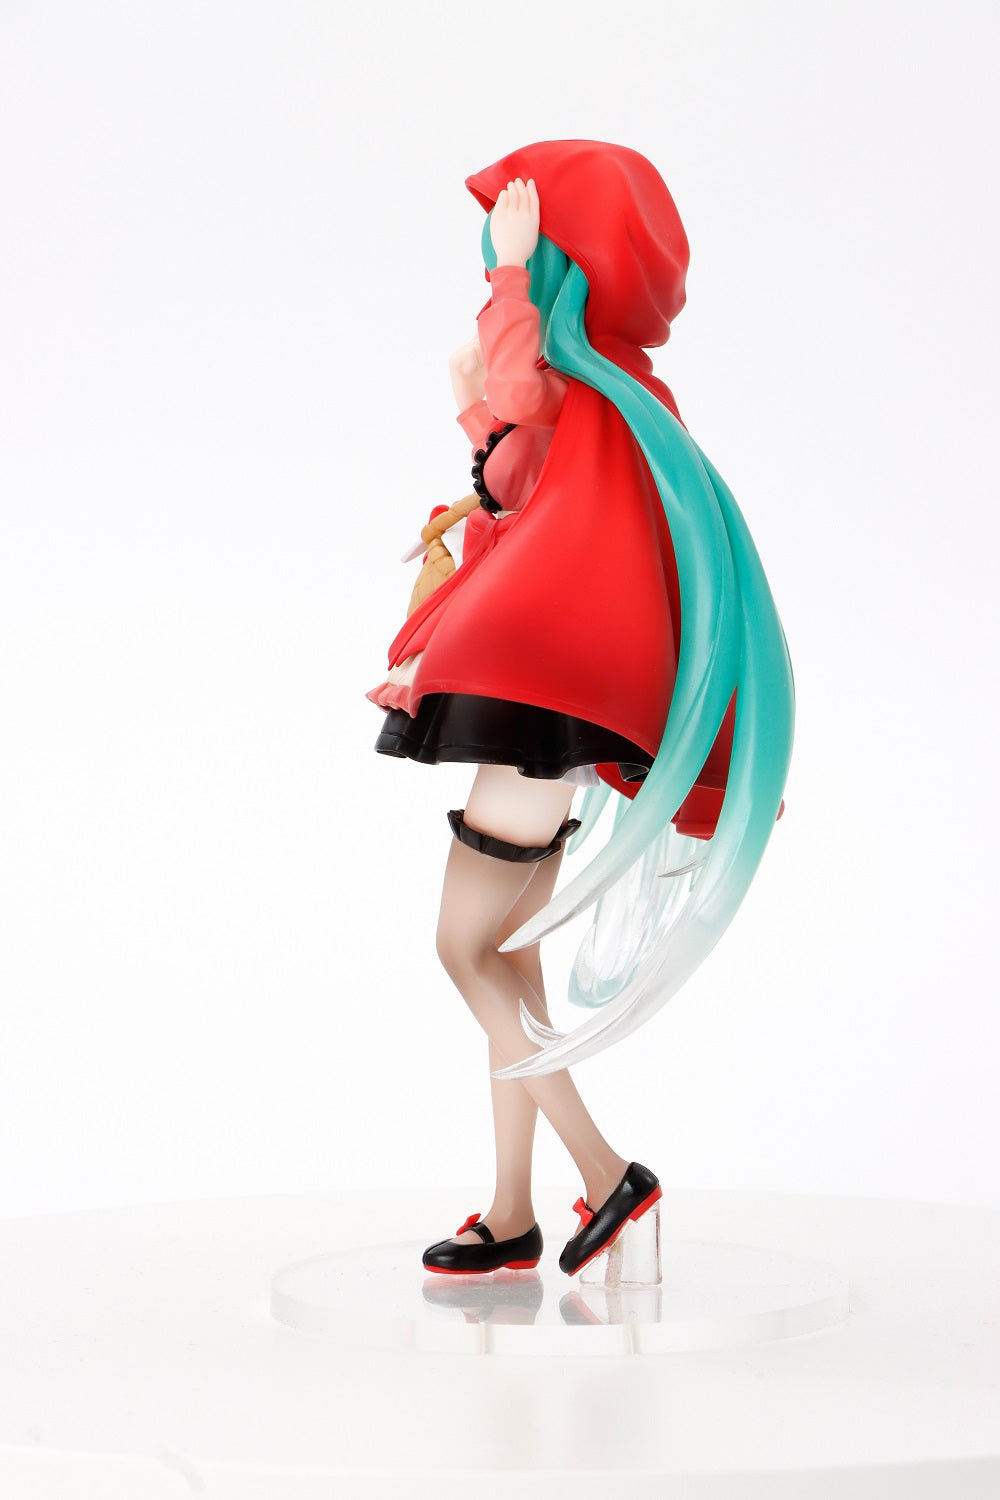 Hatsune Miku Wonderland Figure ~Little Red Riding Hood~ Prize Figure - Glacier Hobbies - Taito